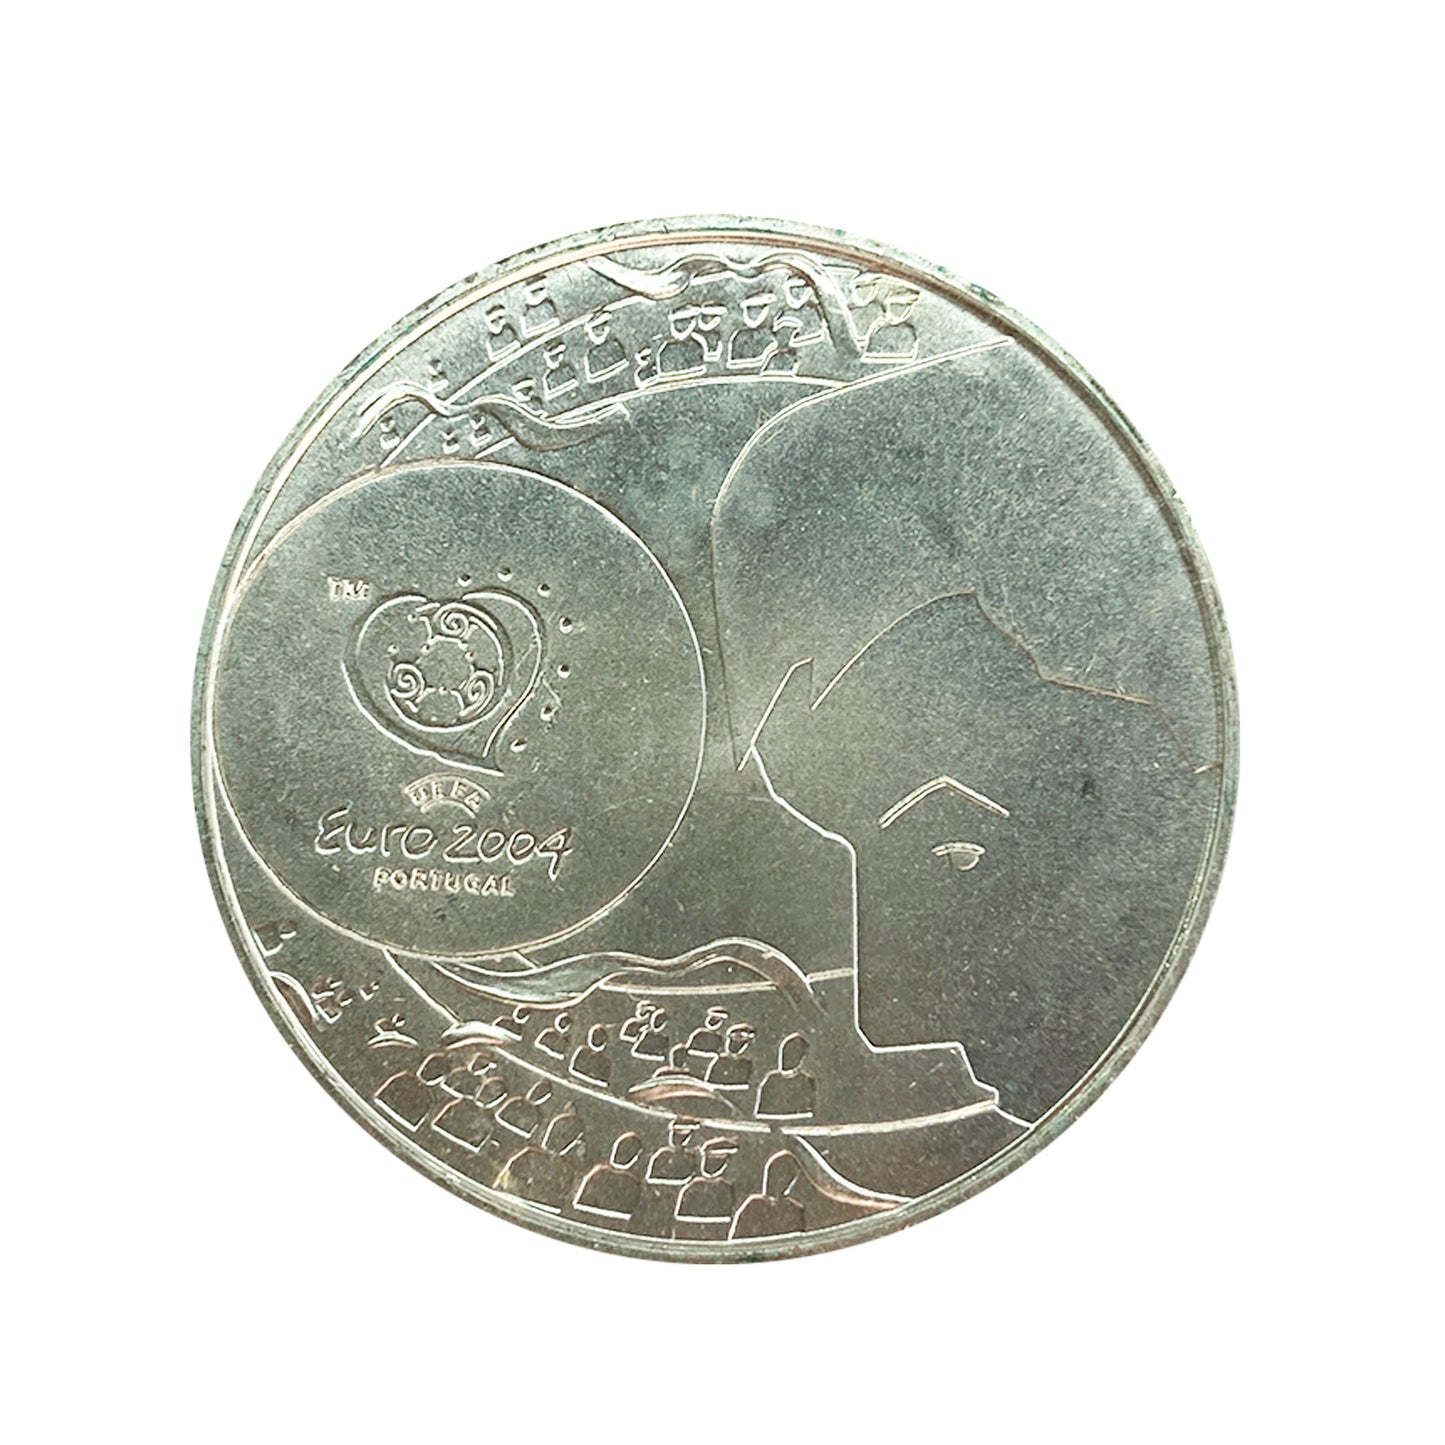 Portugal - Moneda 8 euros en plata 2004 - UEFA El Chute